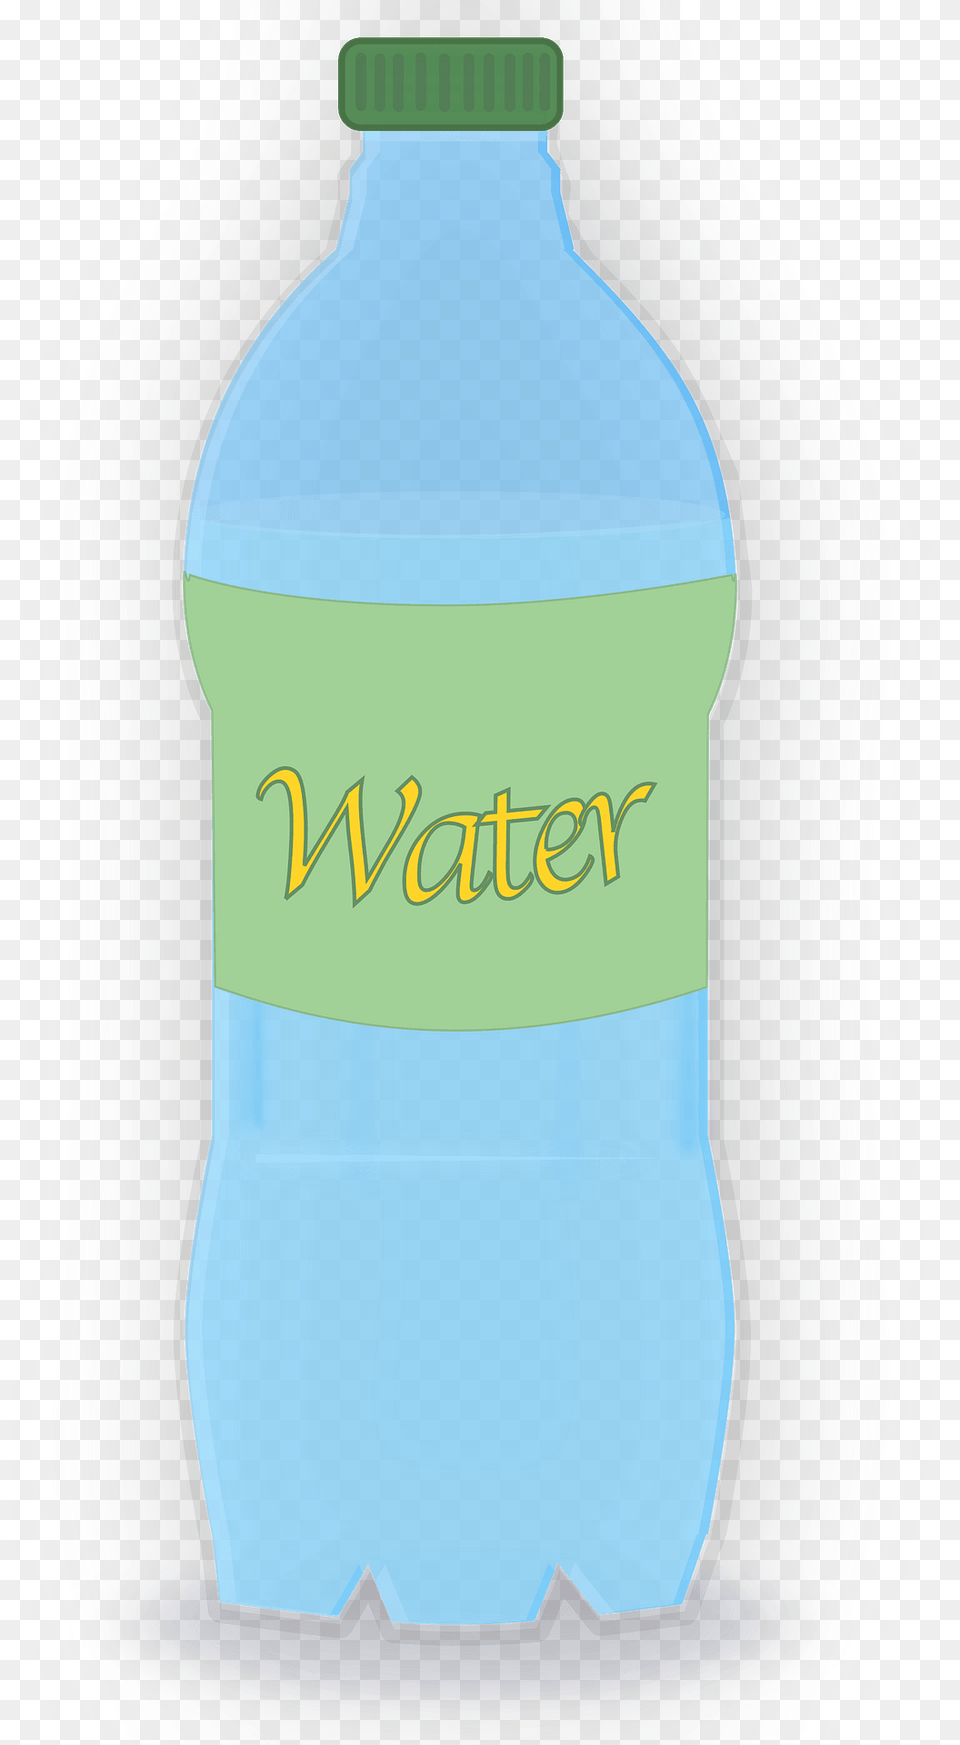 Bottled Water Clipart, Bottle, Water Bottle, Beverage, Mineral Water Png Image